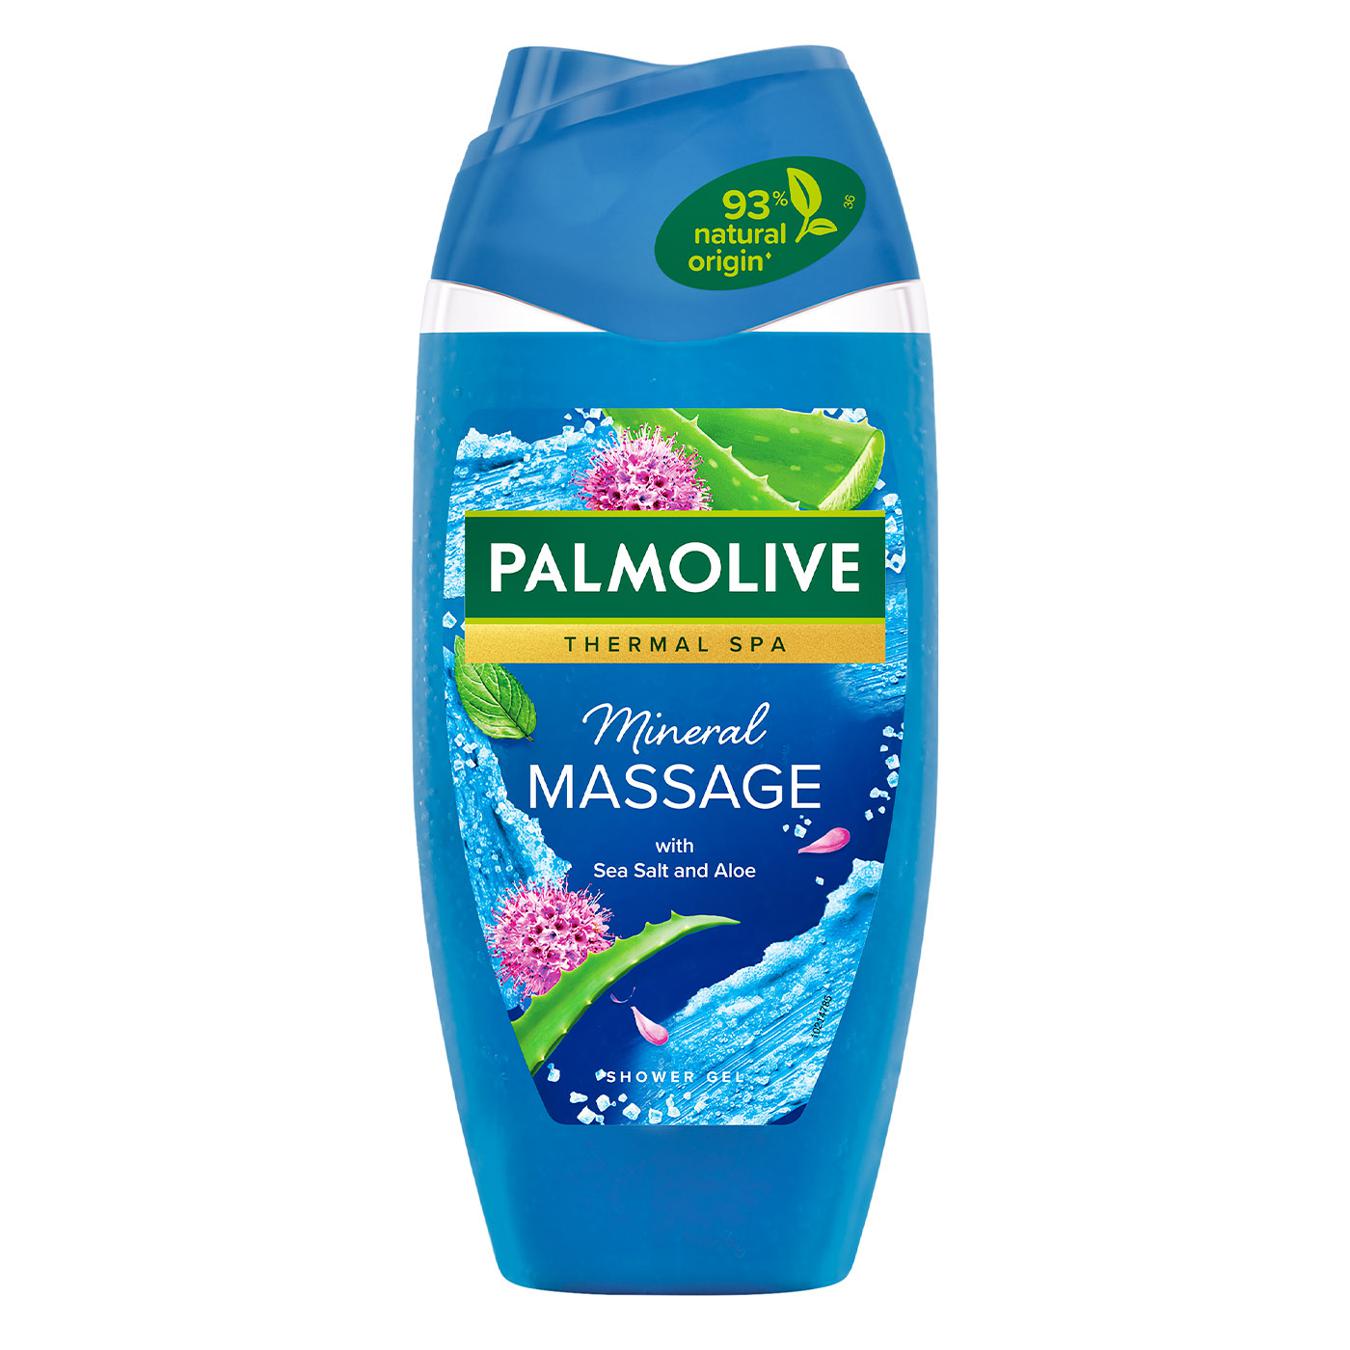 Shower gel Palmolive thermal spa massage Palmolive 250ml